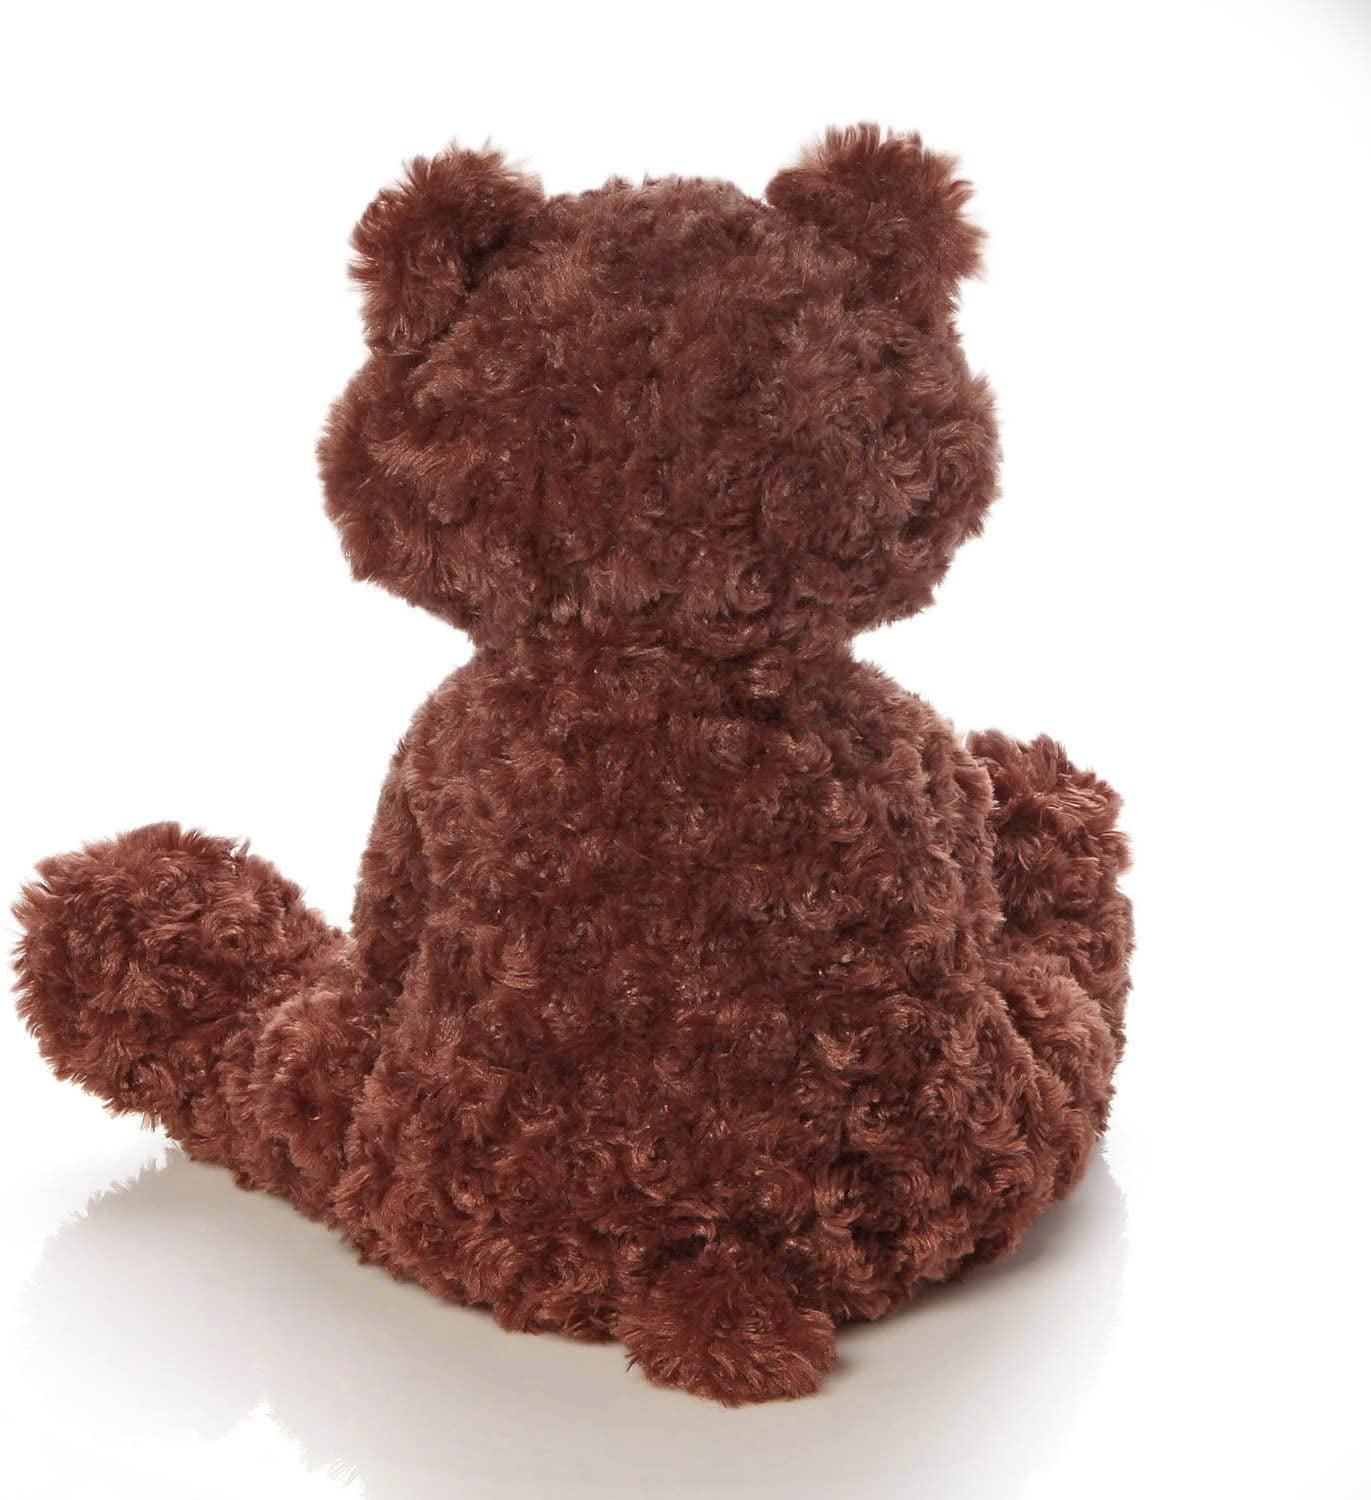 GUND Philbin Cream Colored Shaggy Plush Stuffed Bear 17"h for sale online 